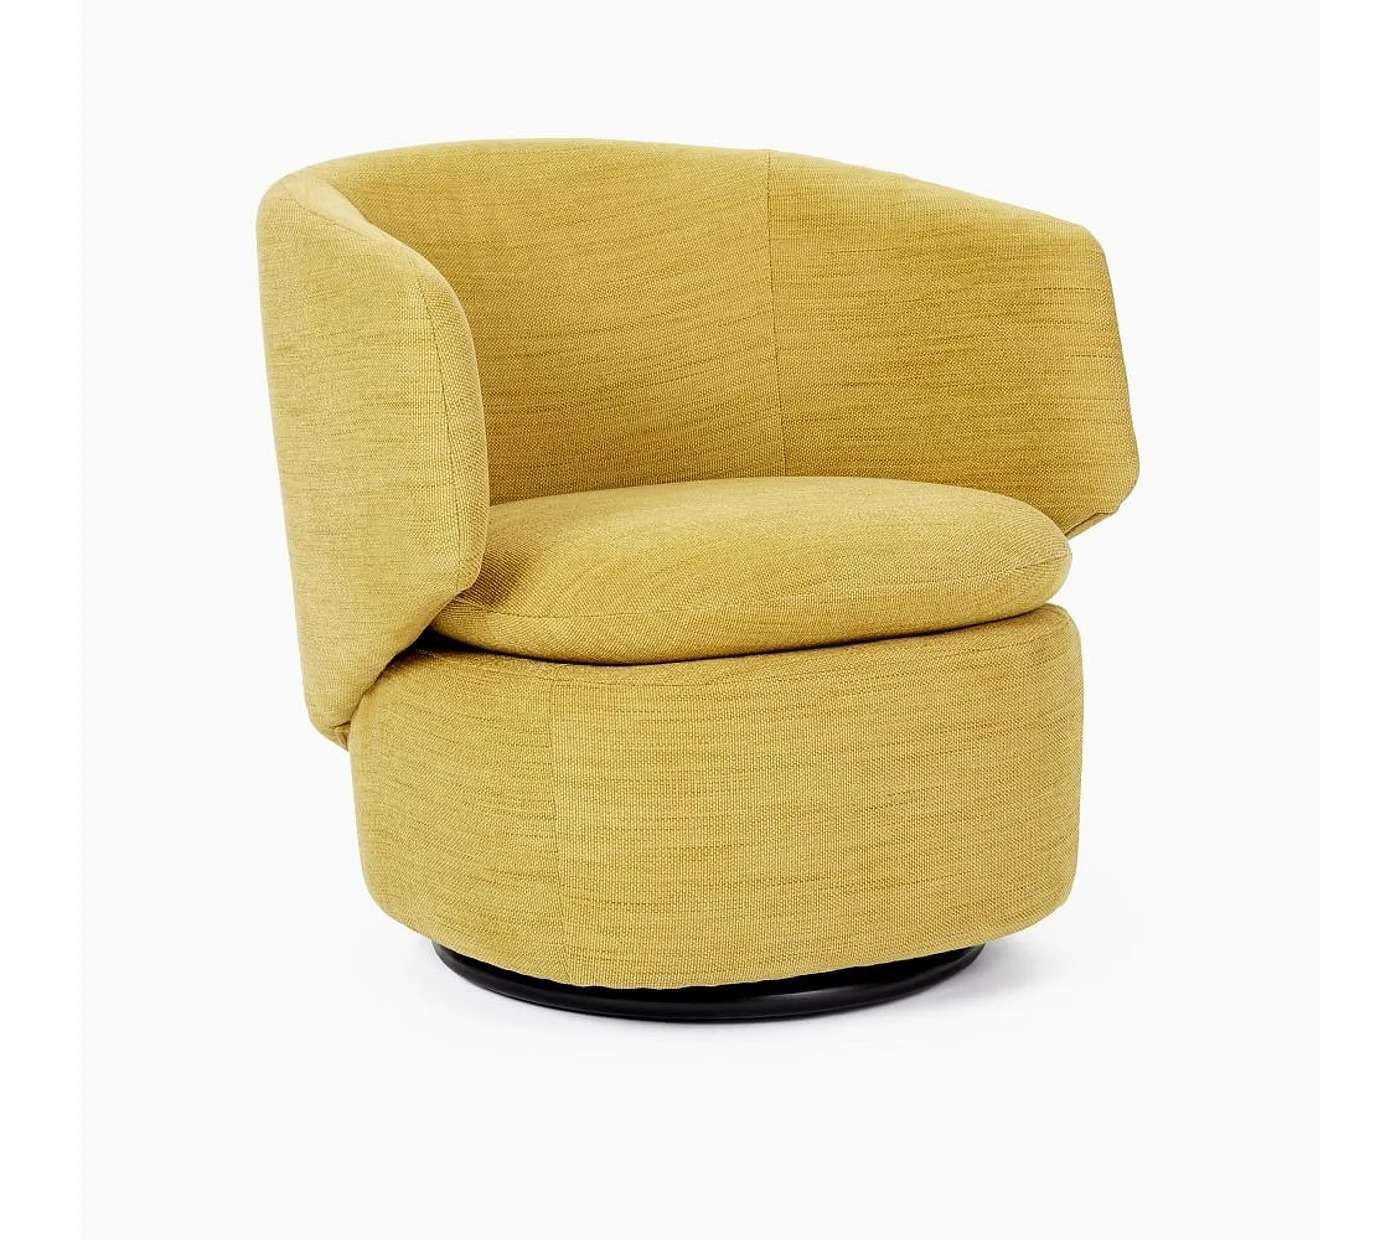 Madison Leather Armchair